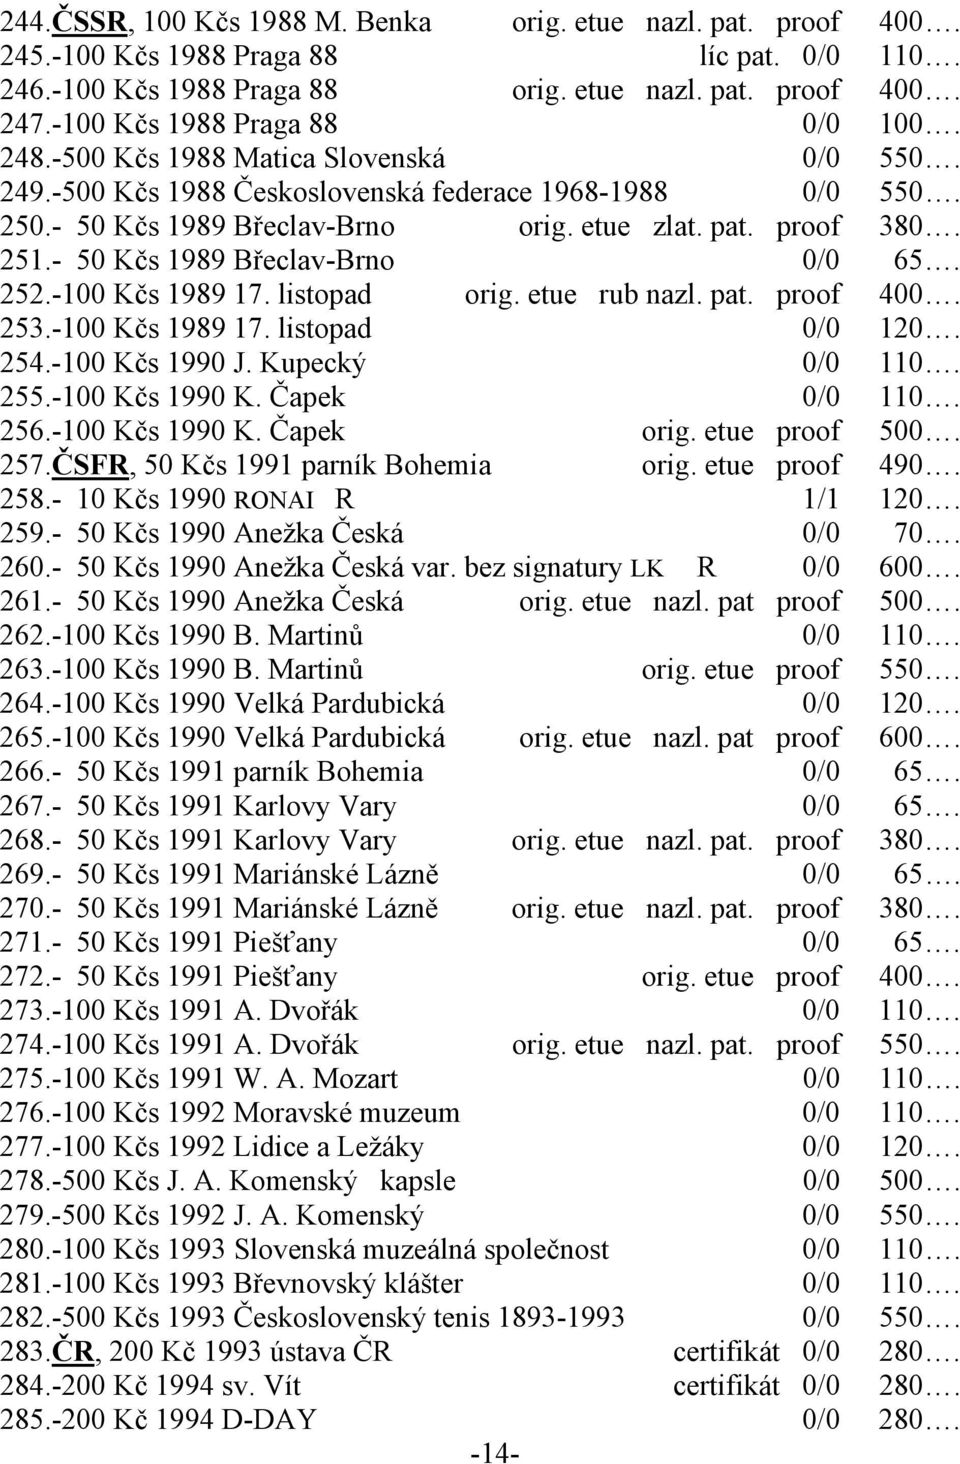 251.- 50 Kčs 1989 Břeclav-Brno 0/0 65. 252.-100 Kčs 1989 17. listopad orig. etue rub nazl. pat. proof 400. 253.-100 Kčs 1989 17. listopad 0/0 120. 254.-100 Kčs 1990 J. Kupecký 0/0 110. 255.